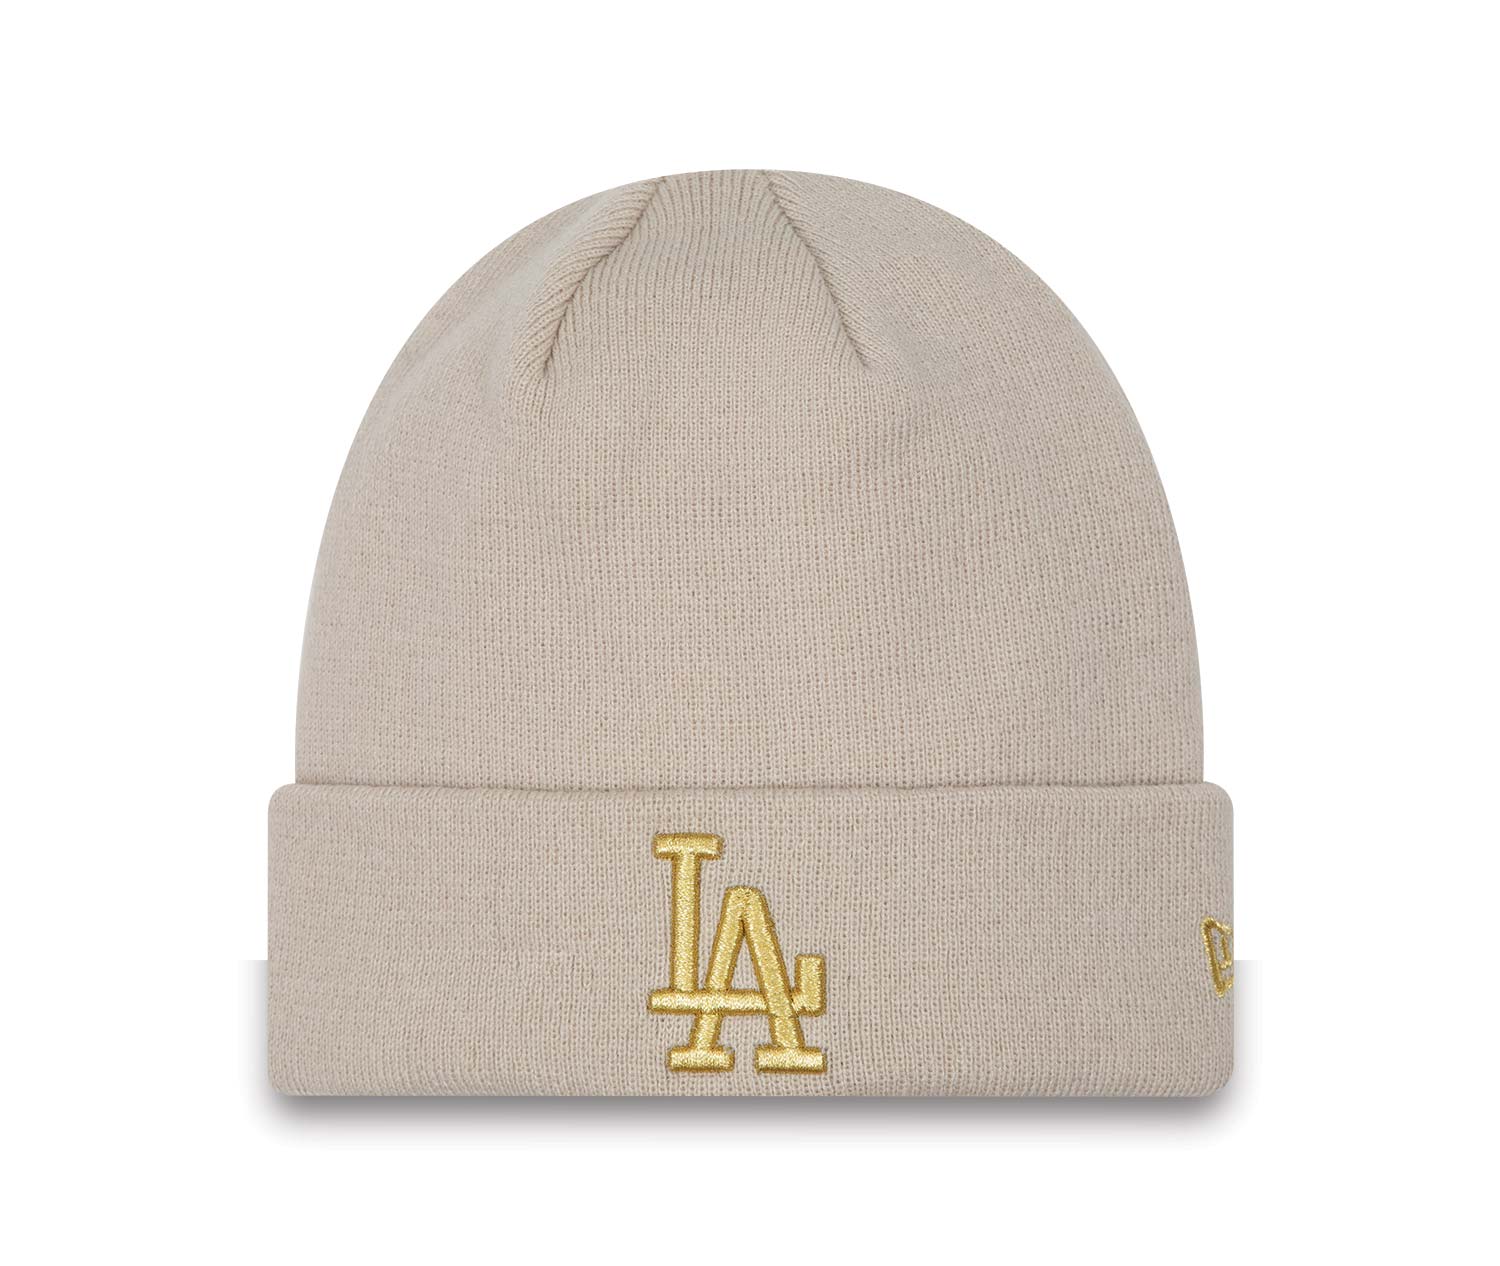 LA Dodgers Womens Metallic Brown Beanie Hat